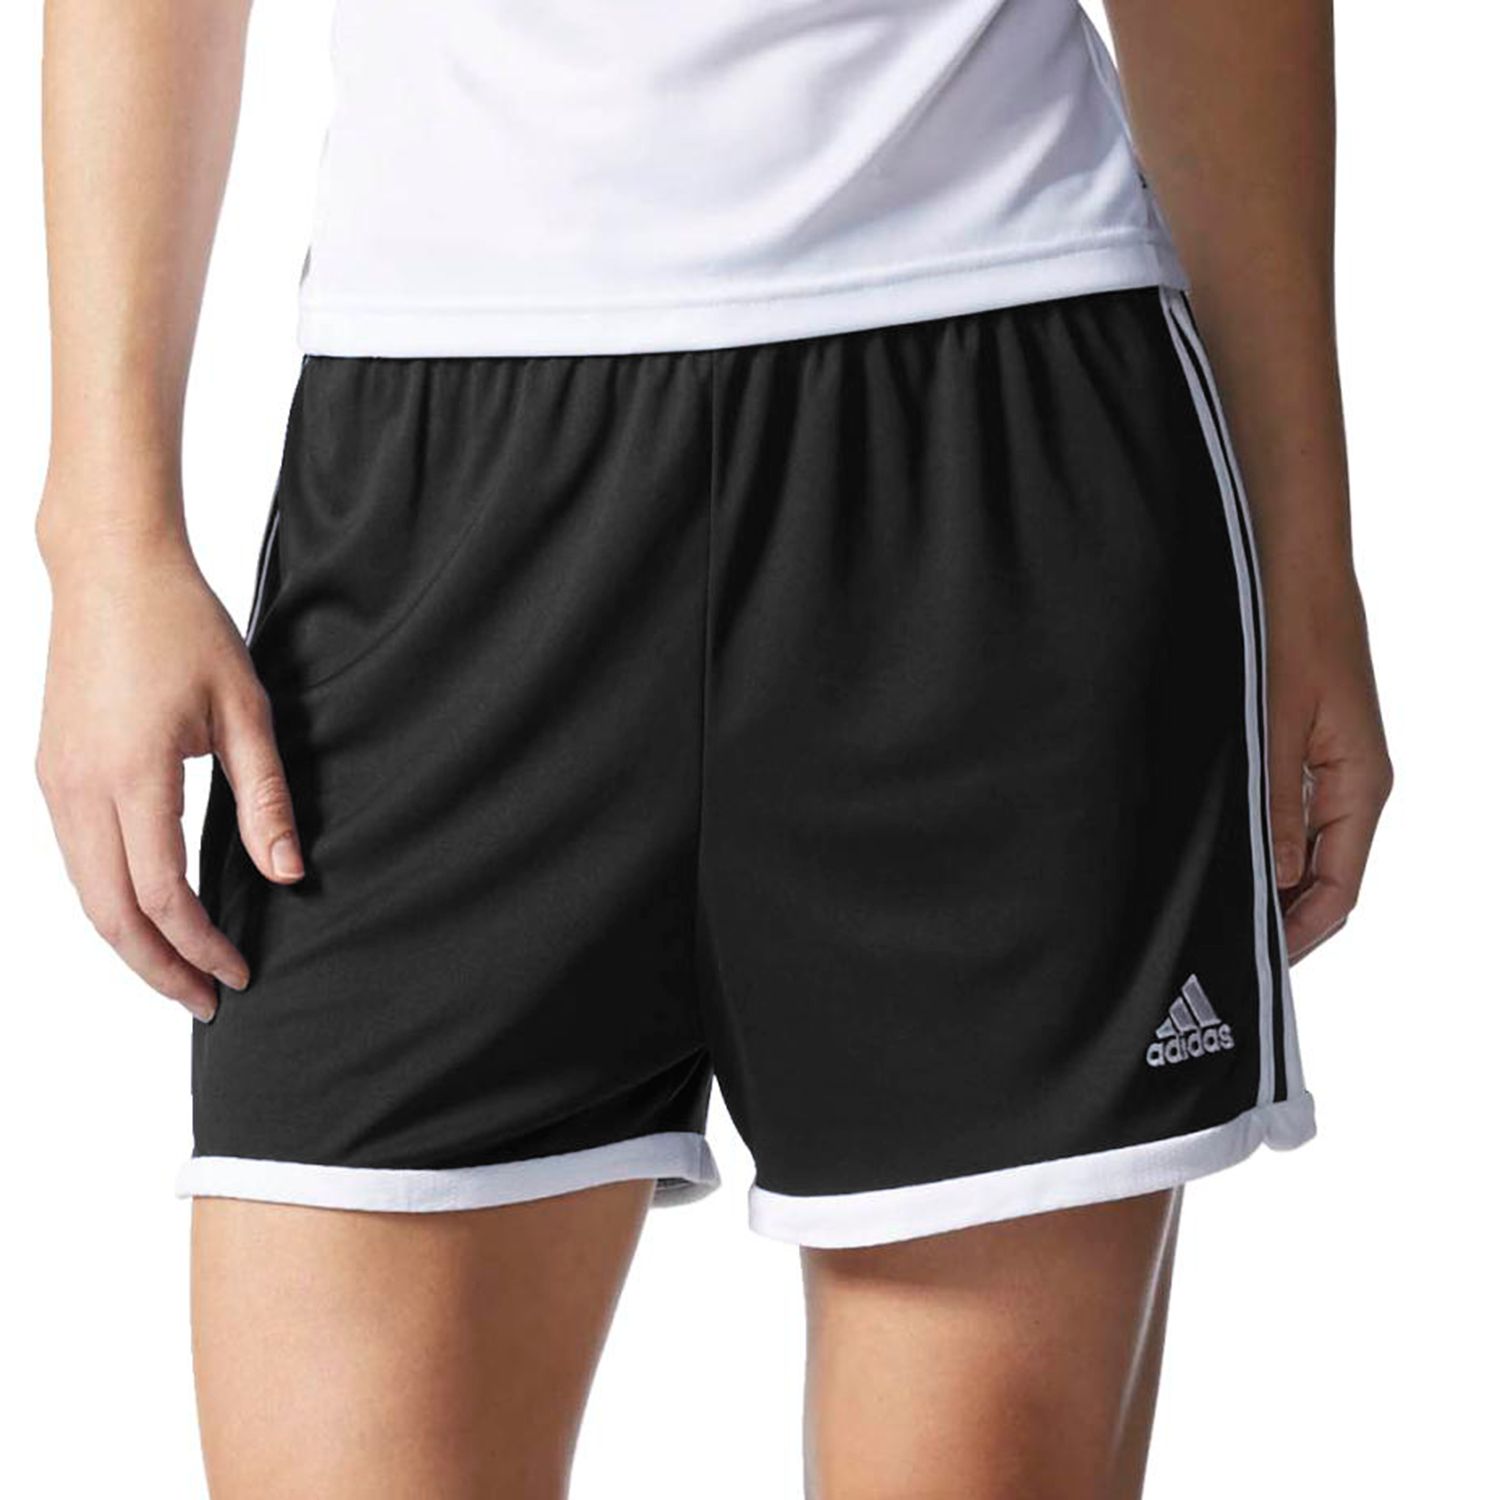 adidas climacool soccer shorts